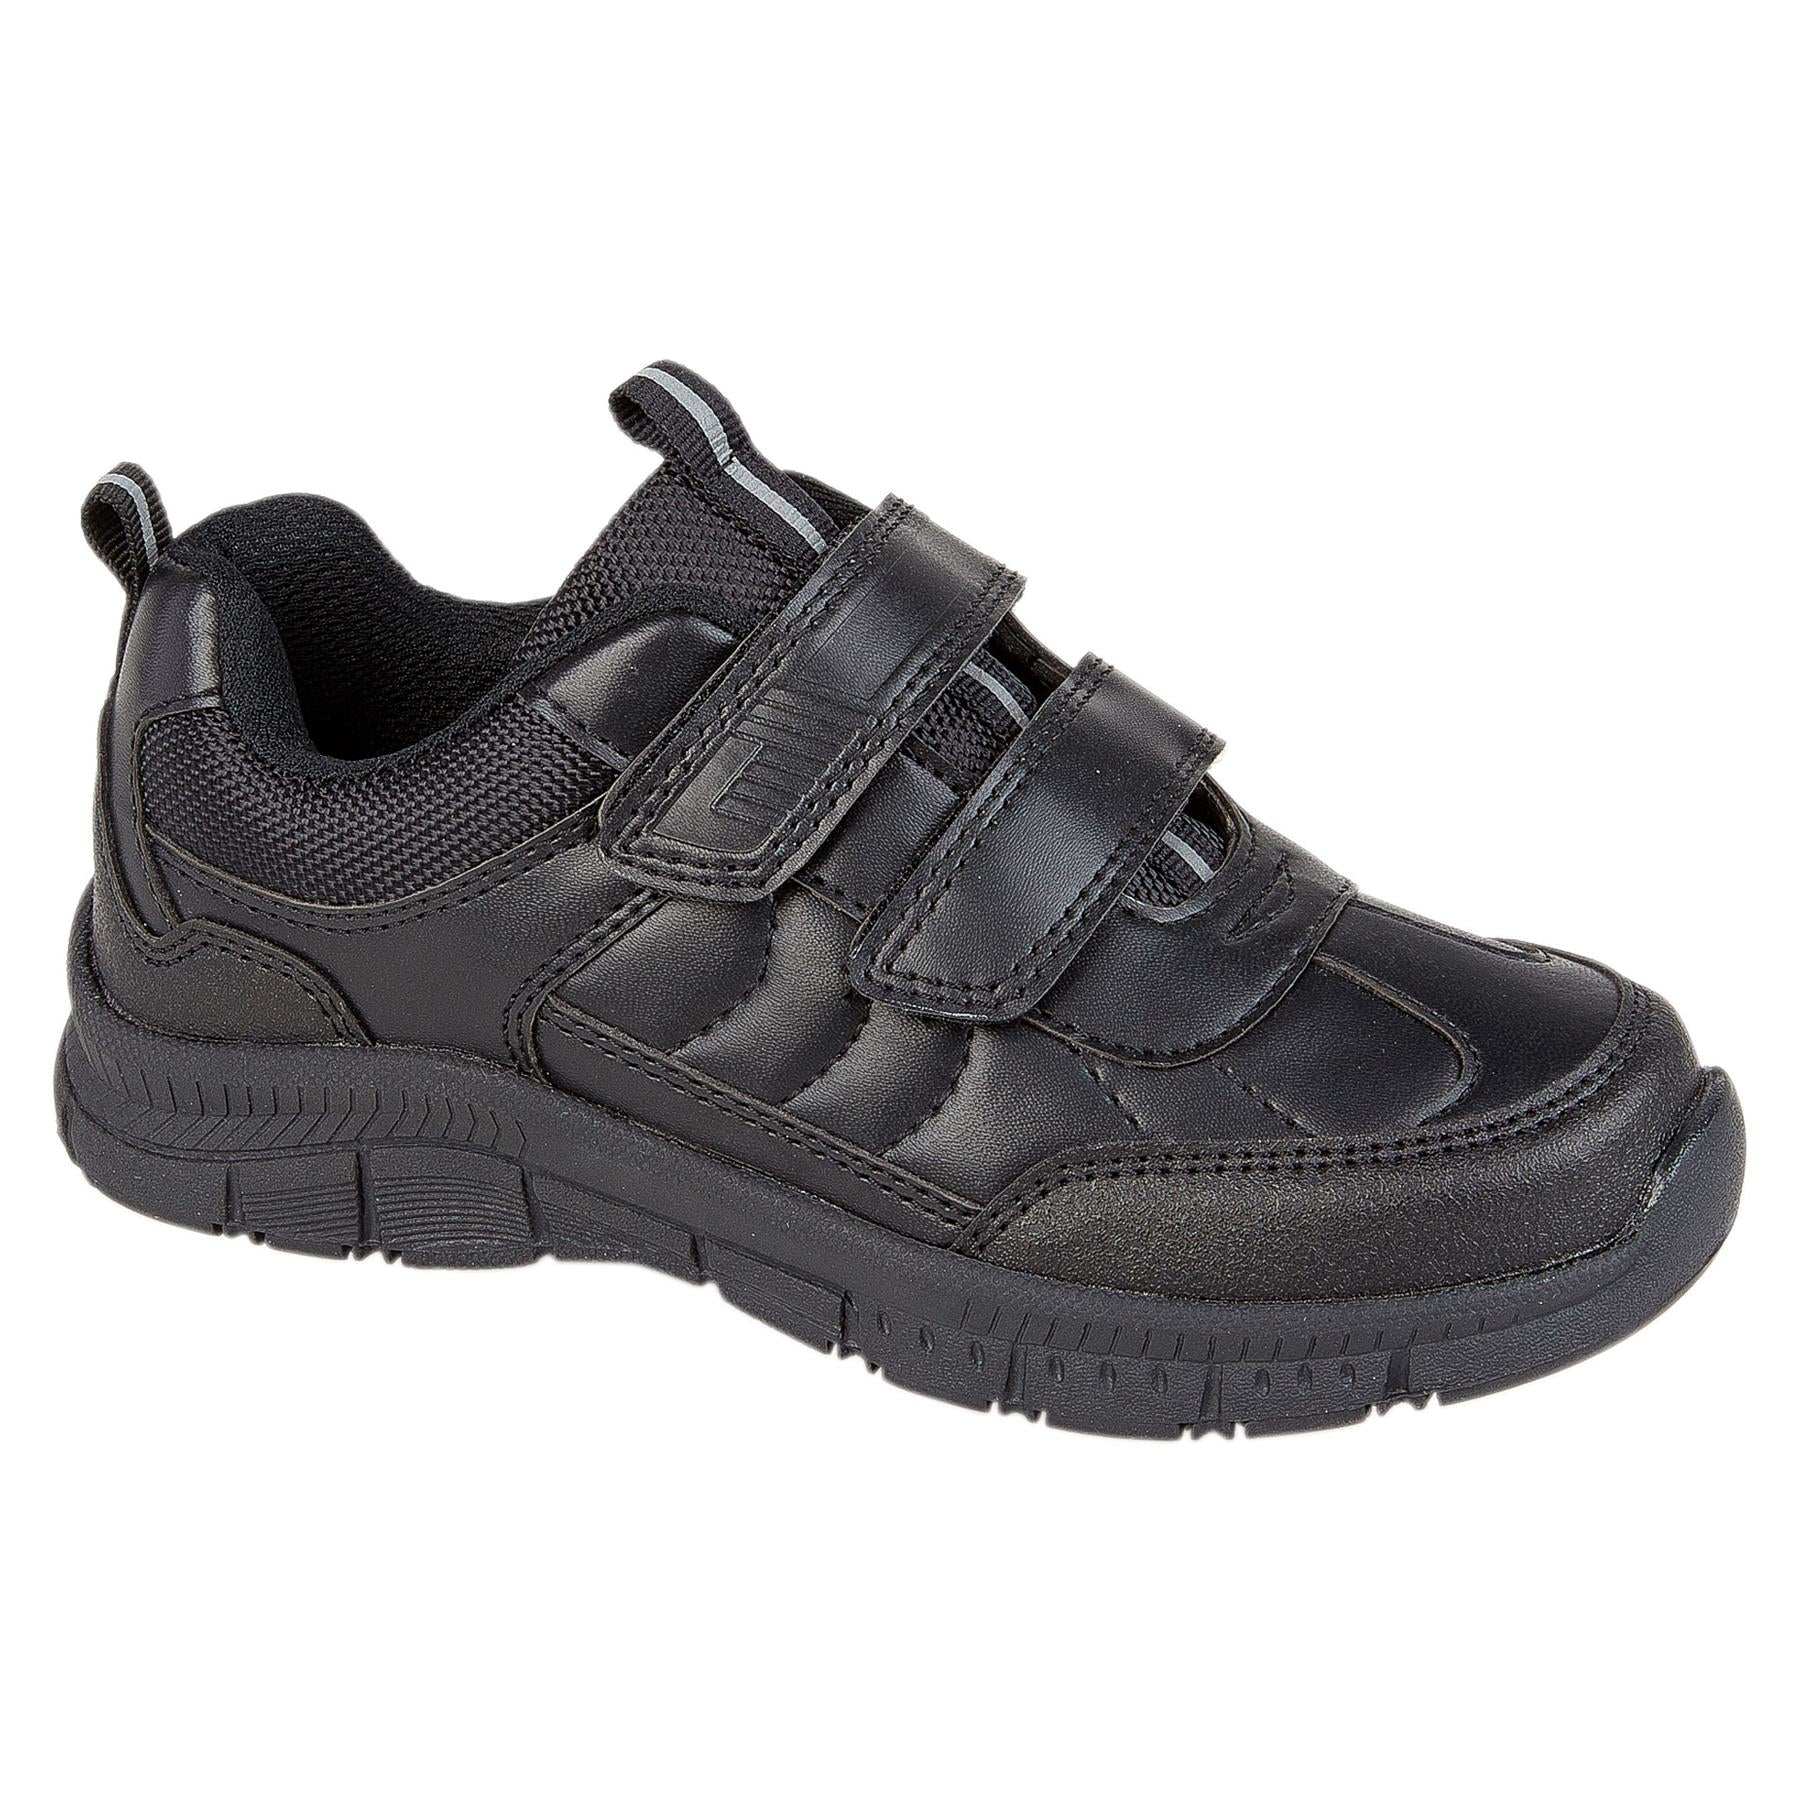 Boys School Shoes Wide Fit Walking Sneaker Kids Touch Fasten Athletic Trainers